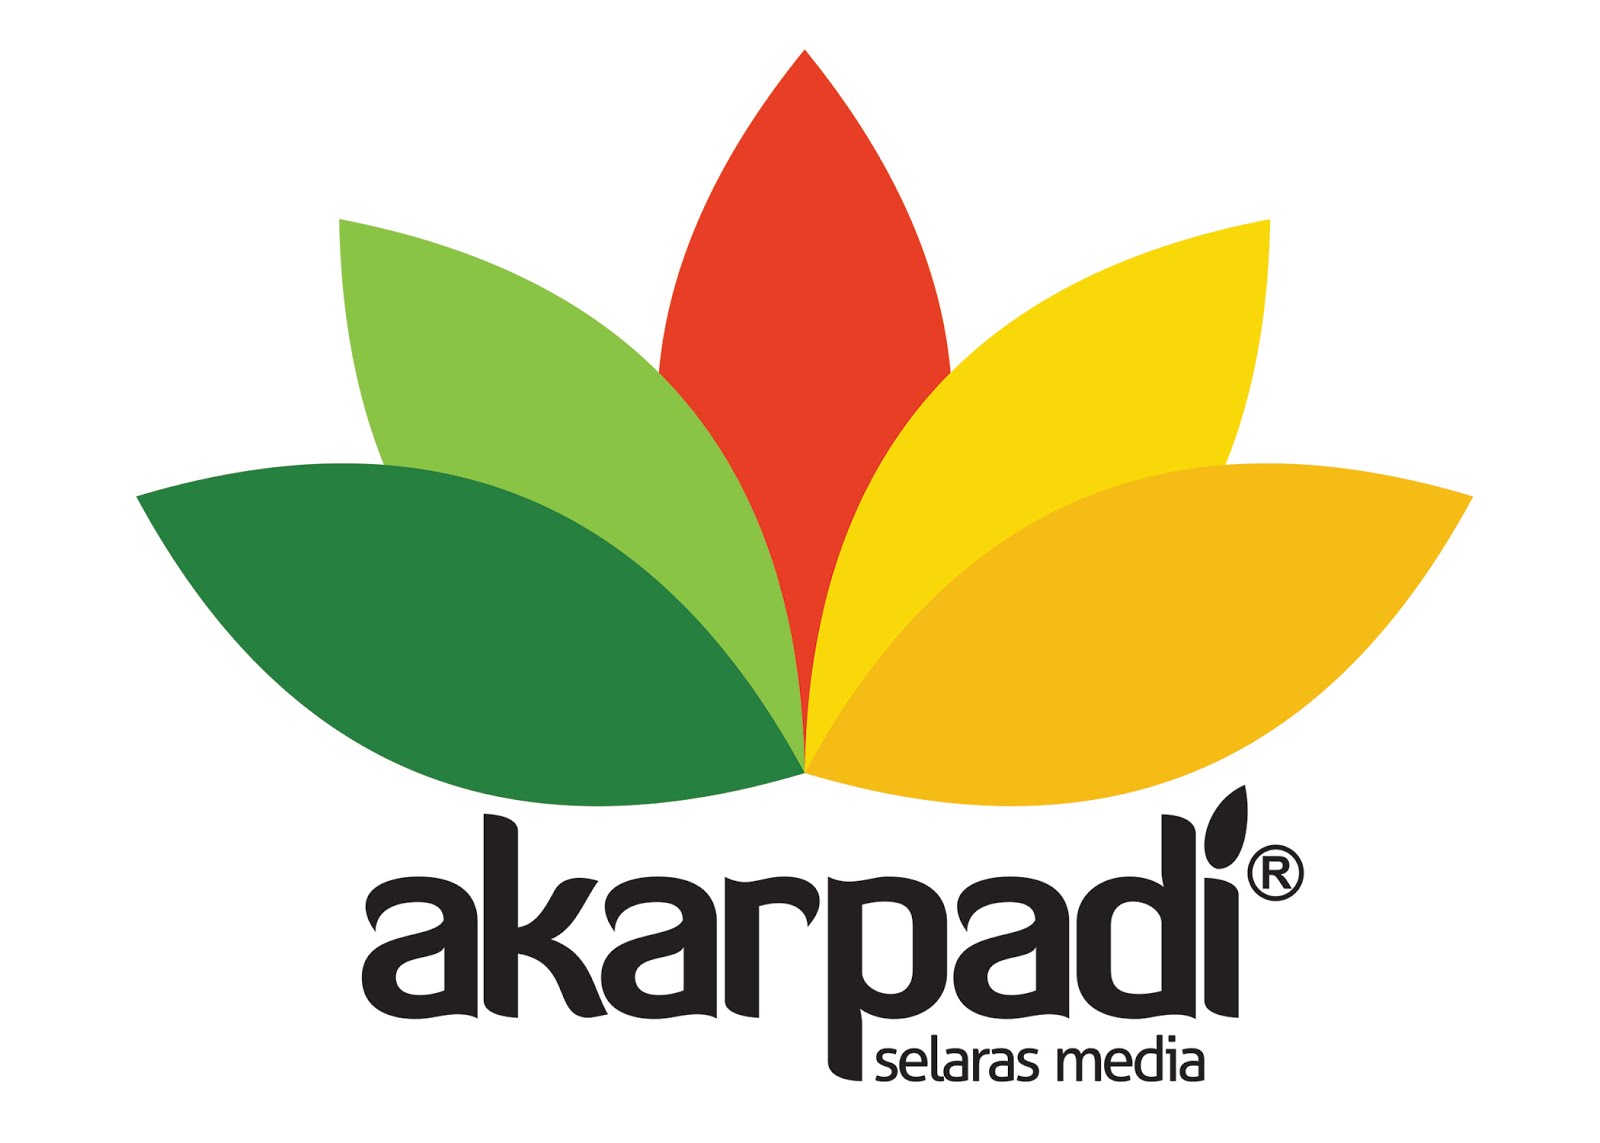 Akarpadi Selaras Media